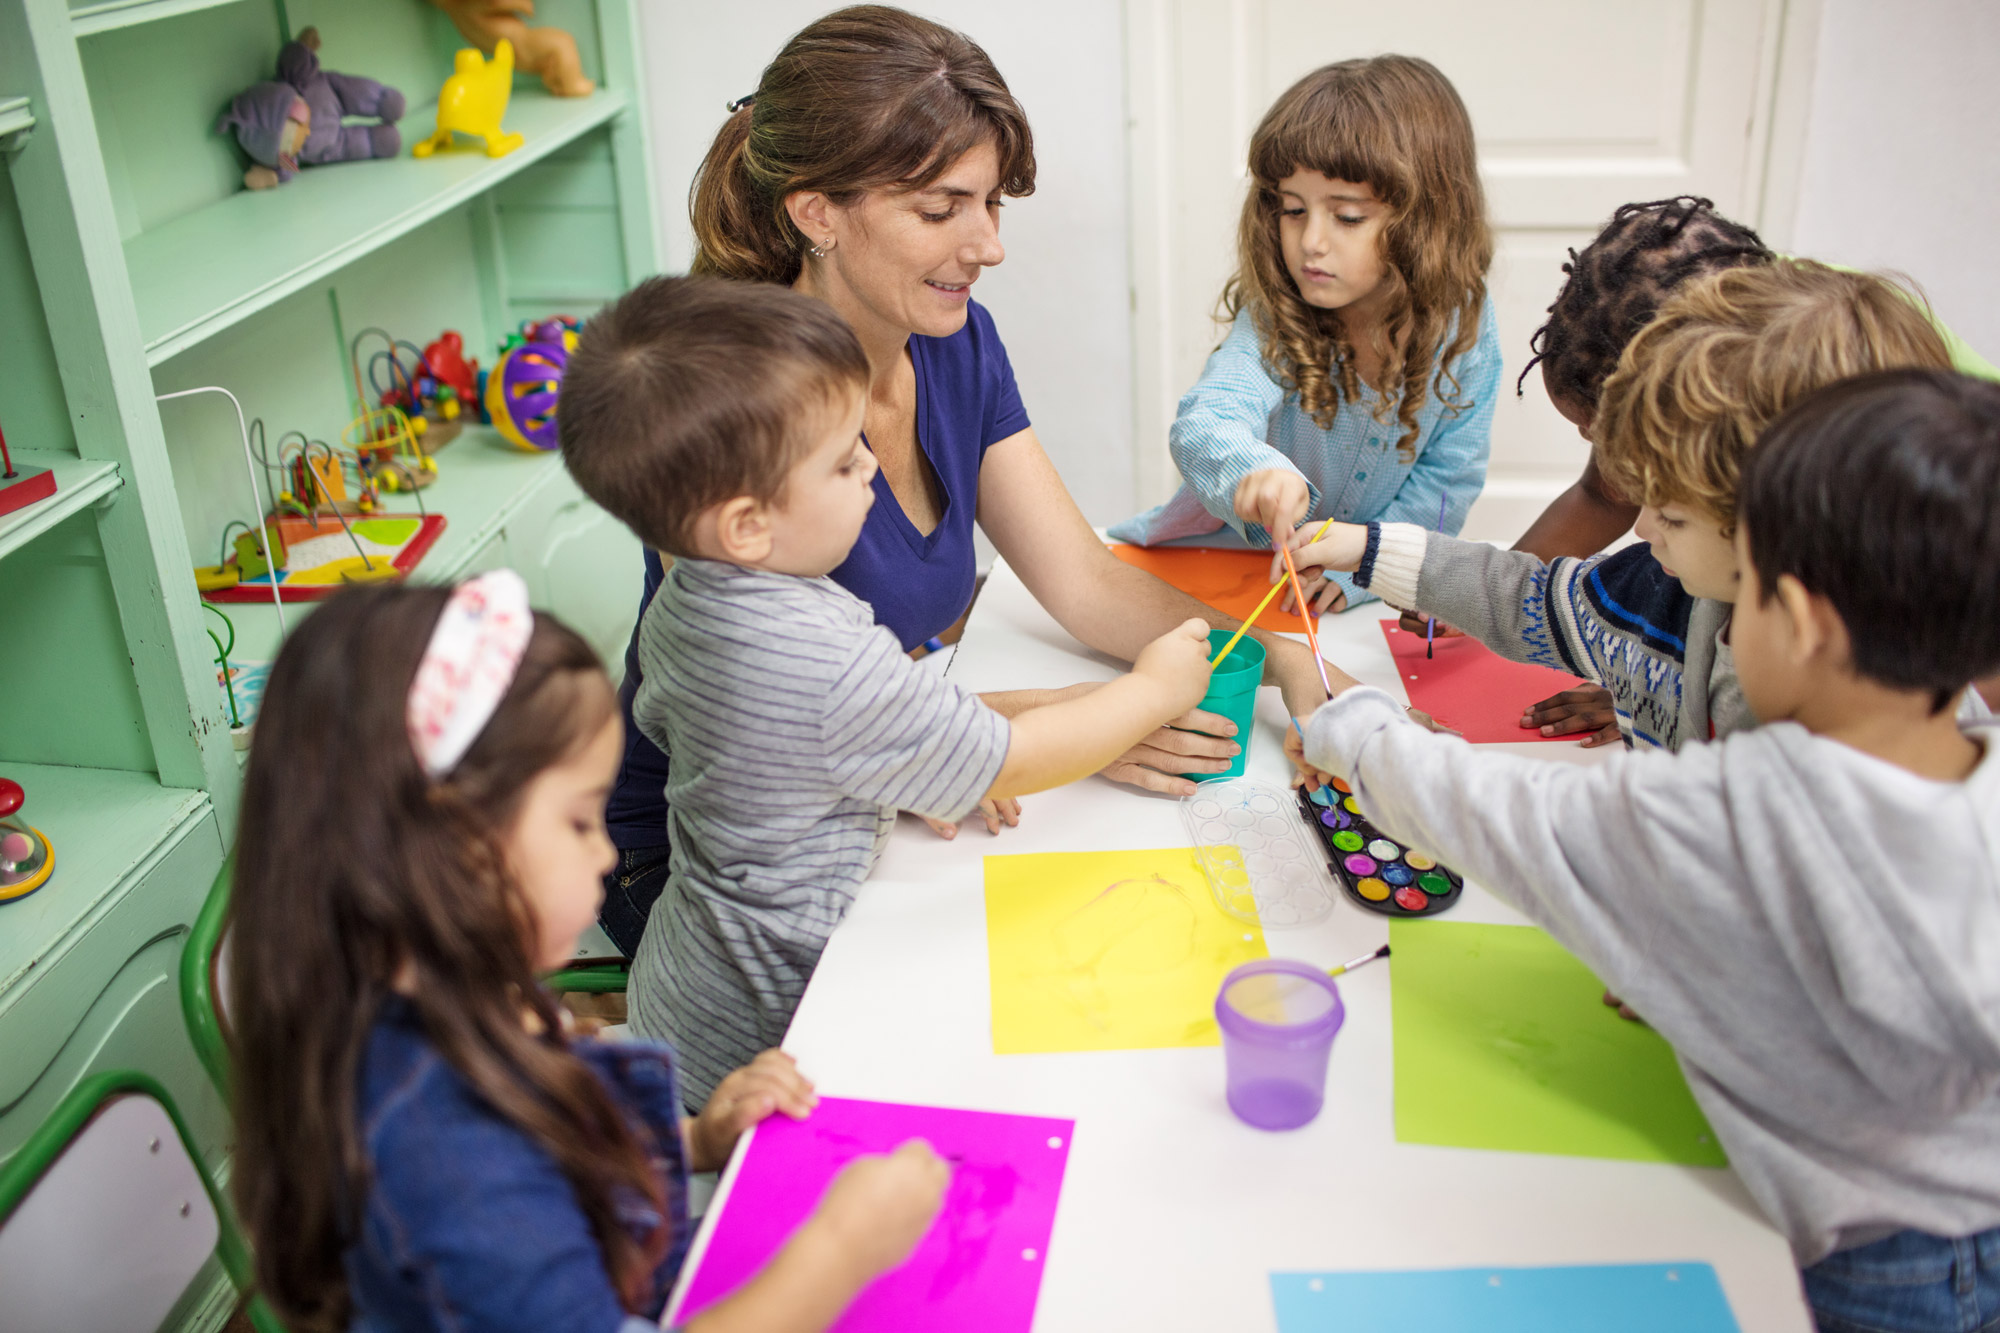 Preschool kids with teacher painting at desk in kindergarten. Teacher sitting with students coloring in classroom.